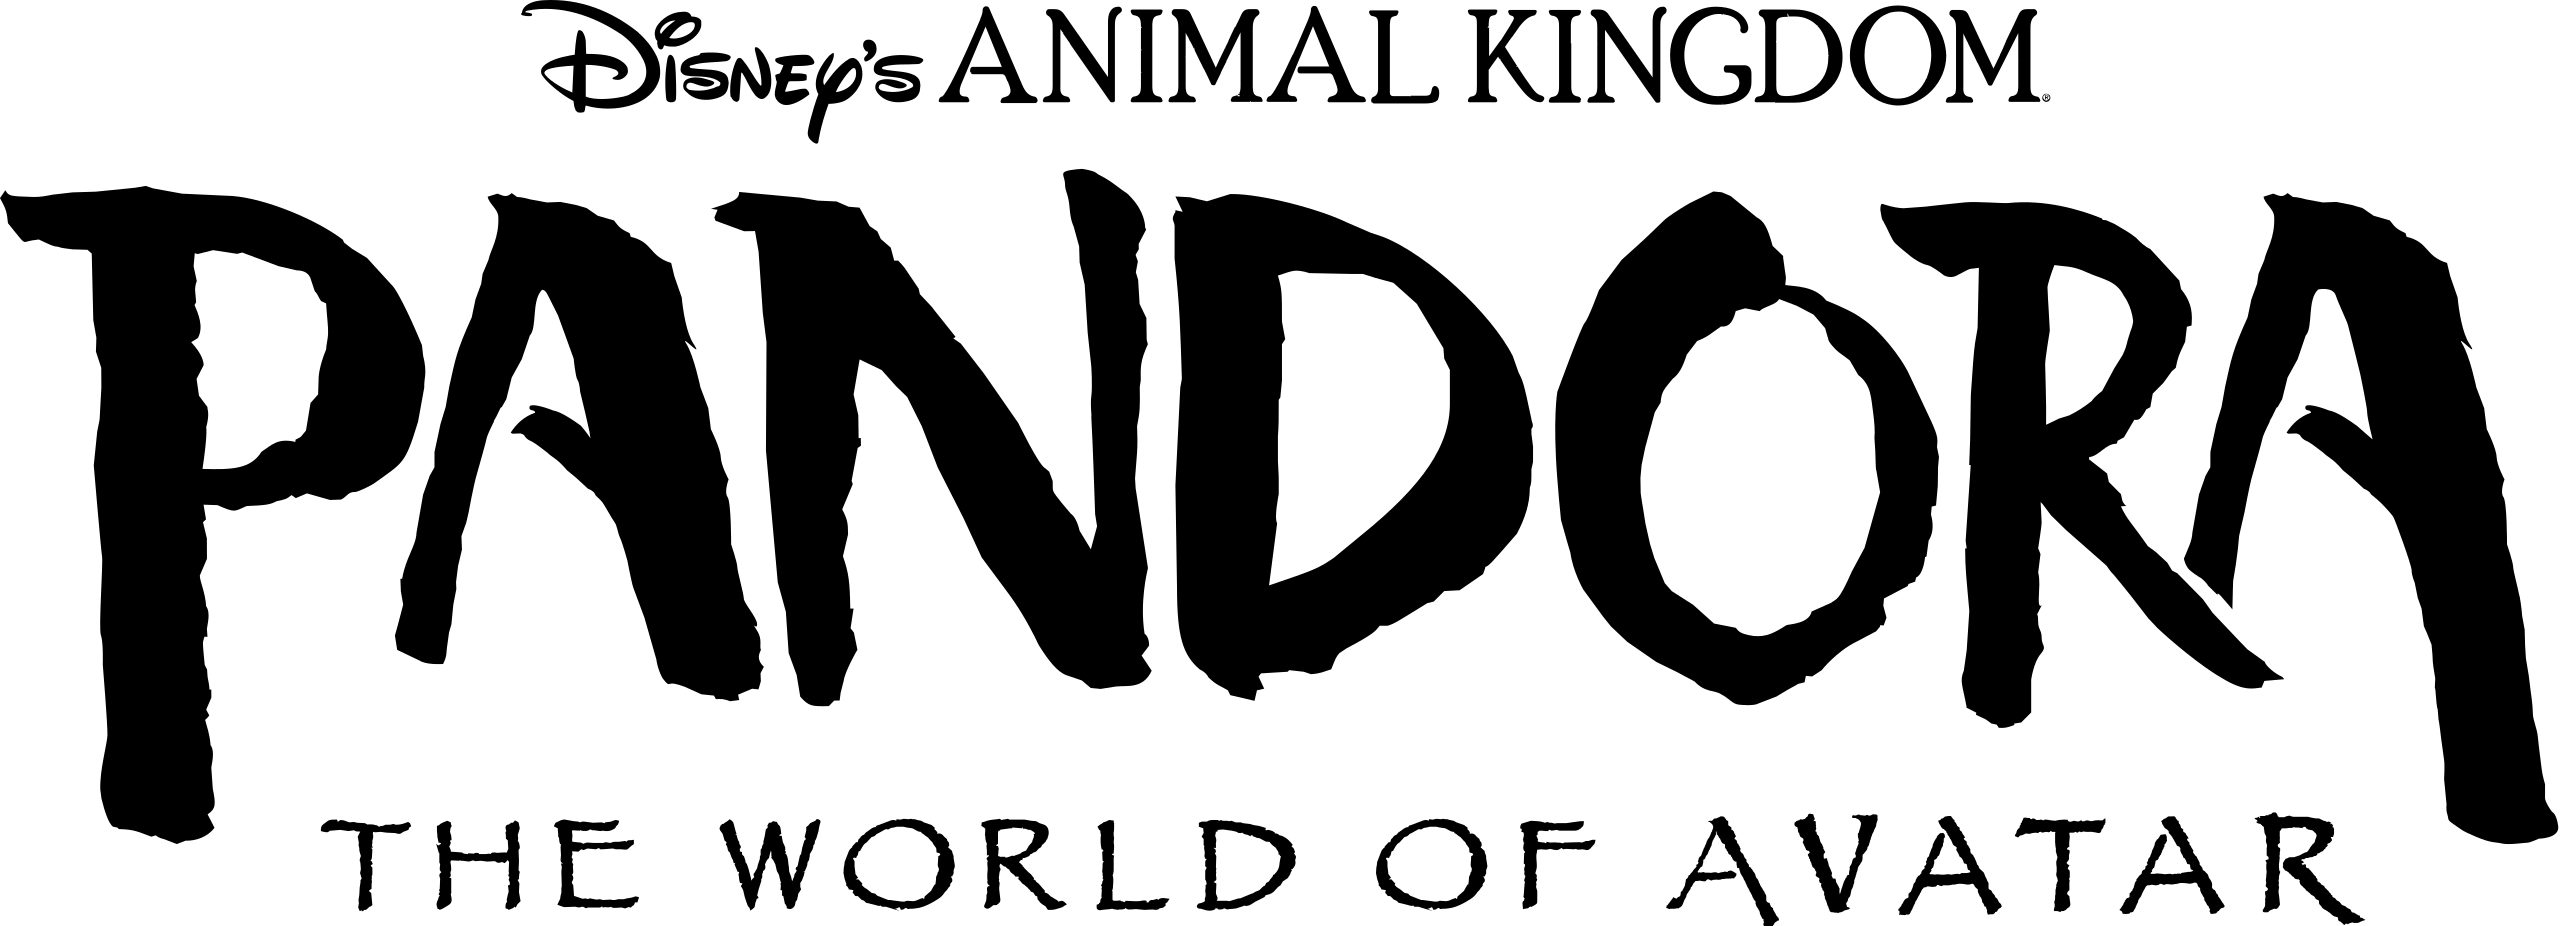 File:Pandora logo black with Disney's Animal  - Wikimedia Commons